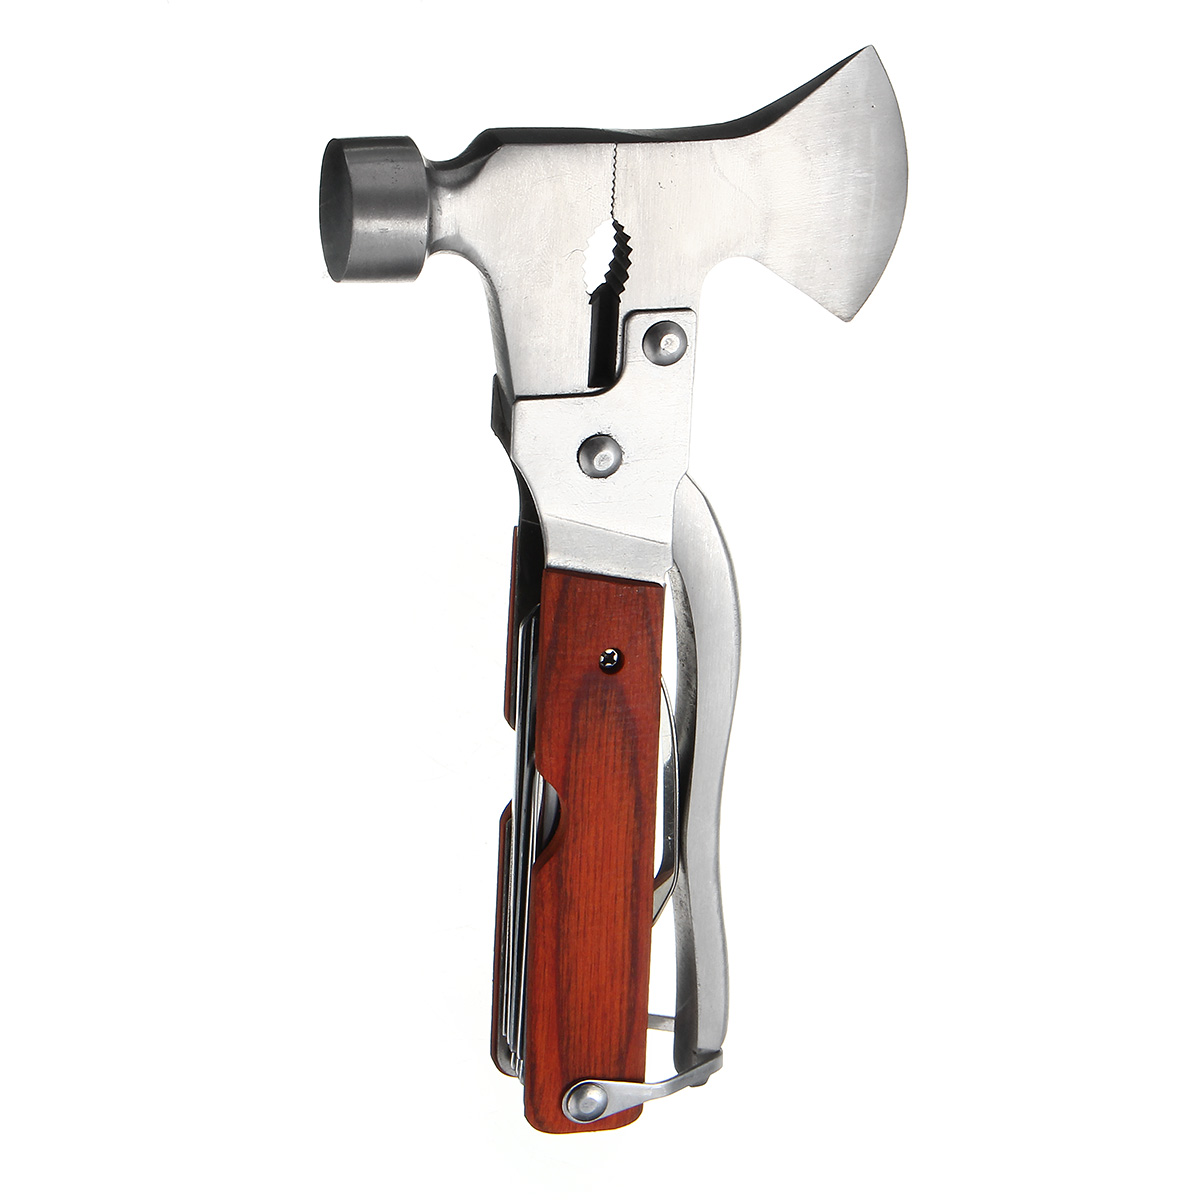 Multifunction-Hammer-Axe-Opener-Screwdriver-Pliers-Tool-Kit-Emergency-Survival-Hatchet-EDC-Tools-1306709-7